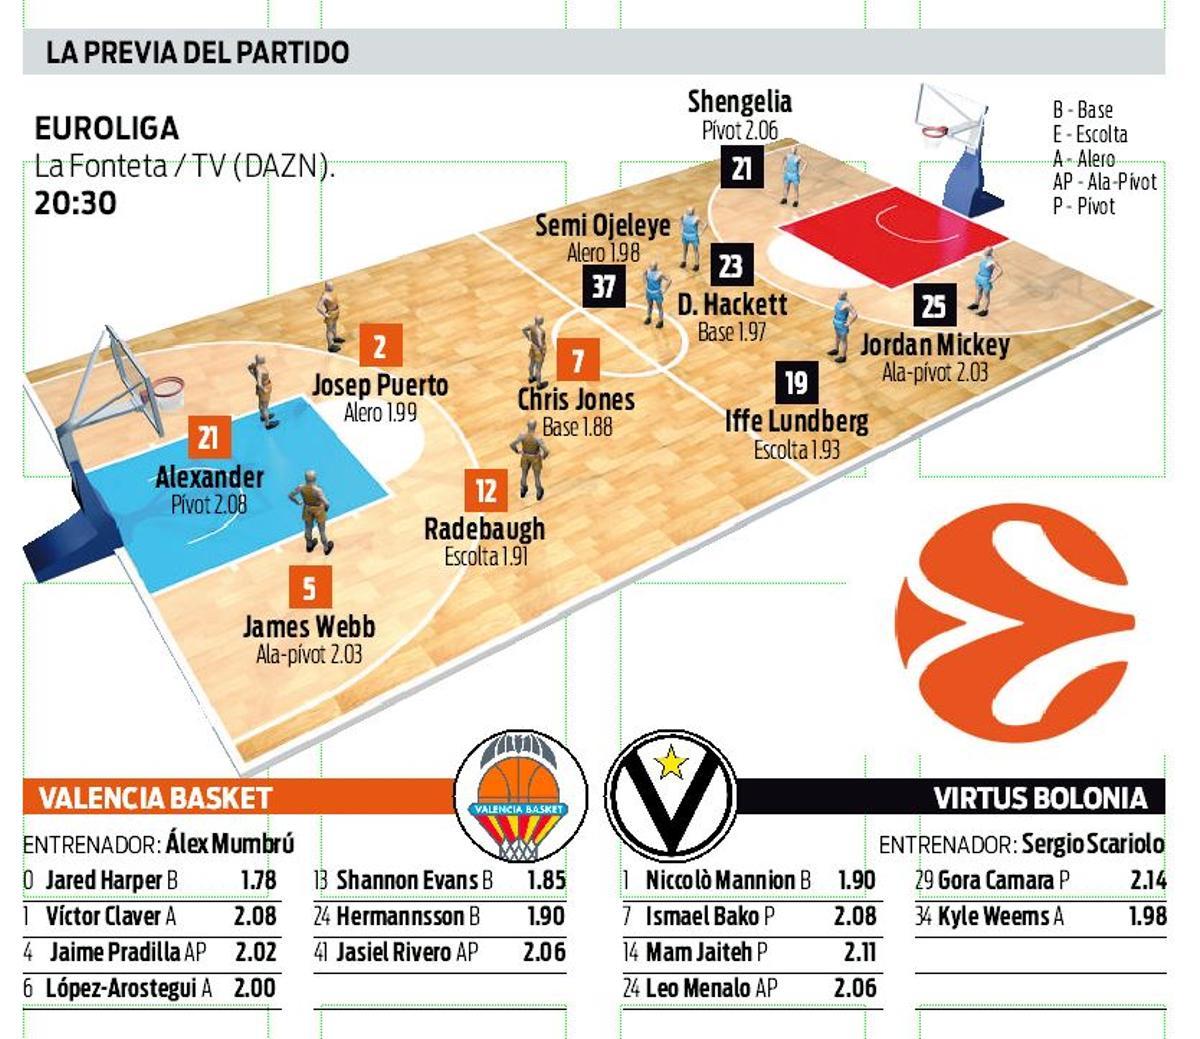 La previa del Valencia Basket - Virtus Bolonia.